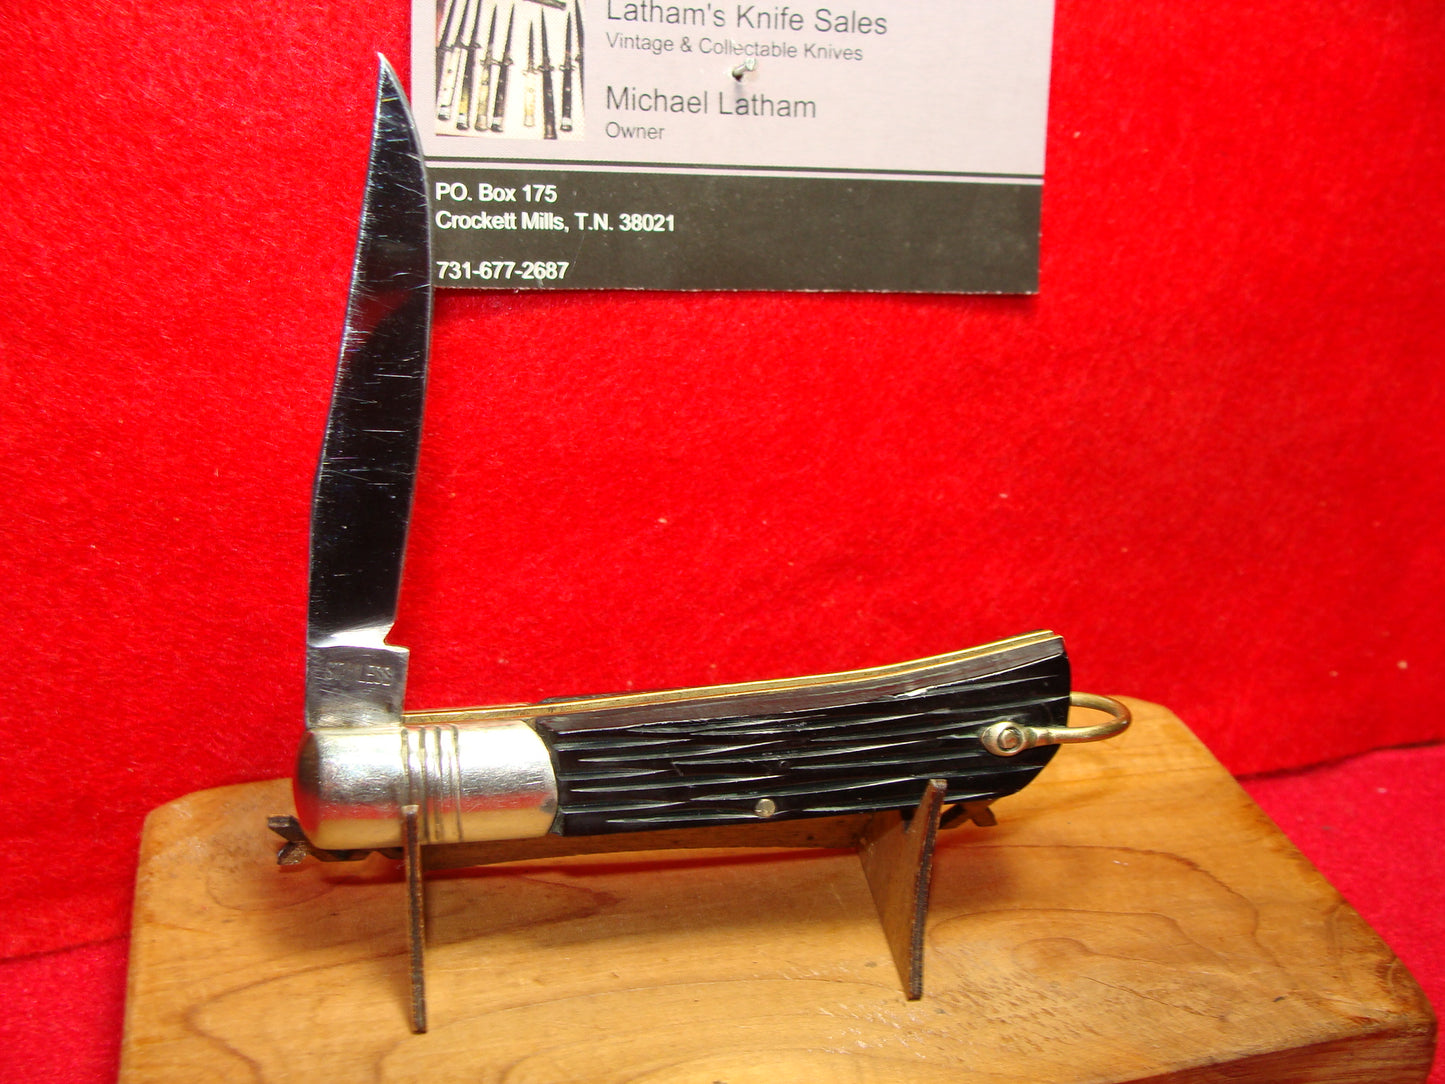 UTICA CUT CO. JAPAN 1950-56 SMALL HUNTER BO/BC JAPAN AUTOMATIC KNIFE BLACK BONE HANDLES